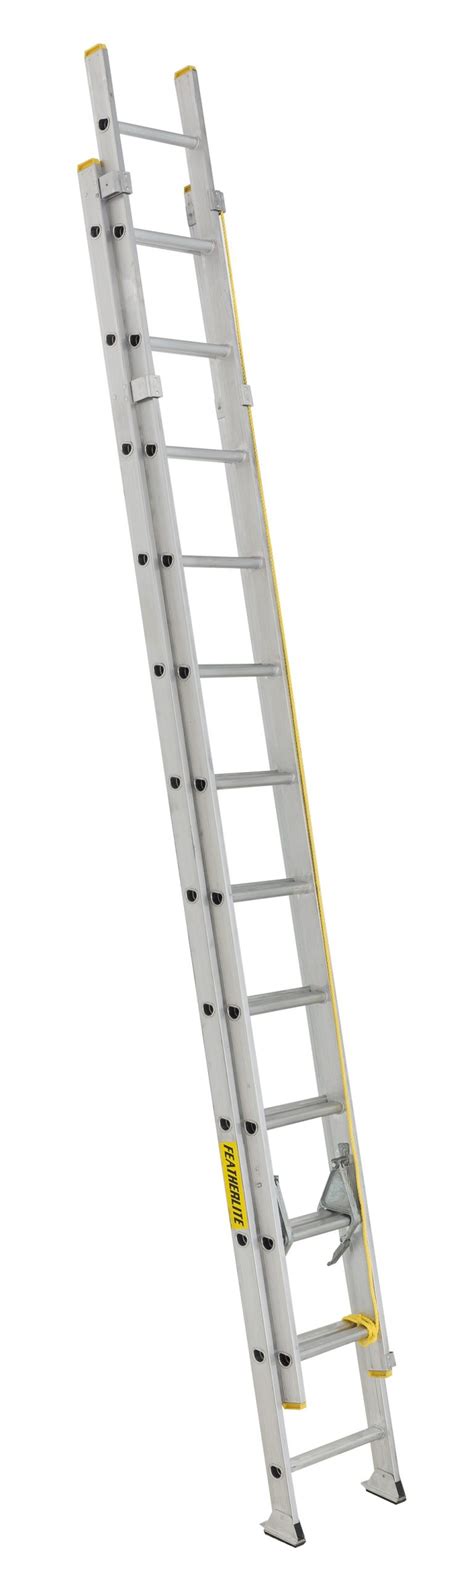 Featherlite 24 Aluminum Extension Ladder 300 Lb Type 1a D Rung I Beam